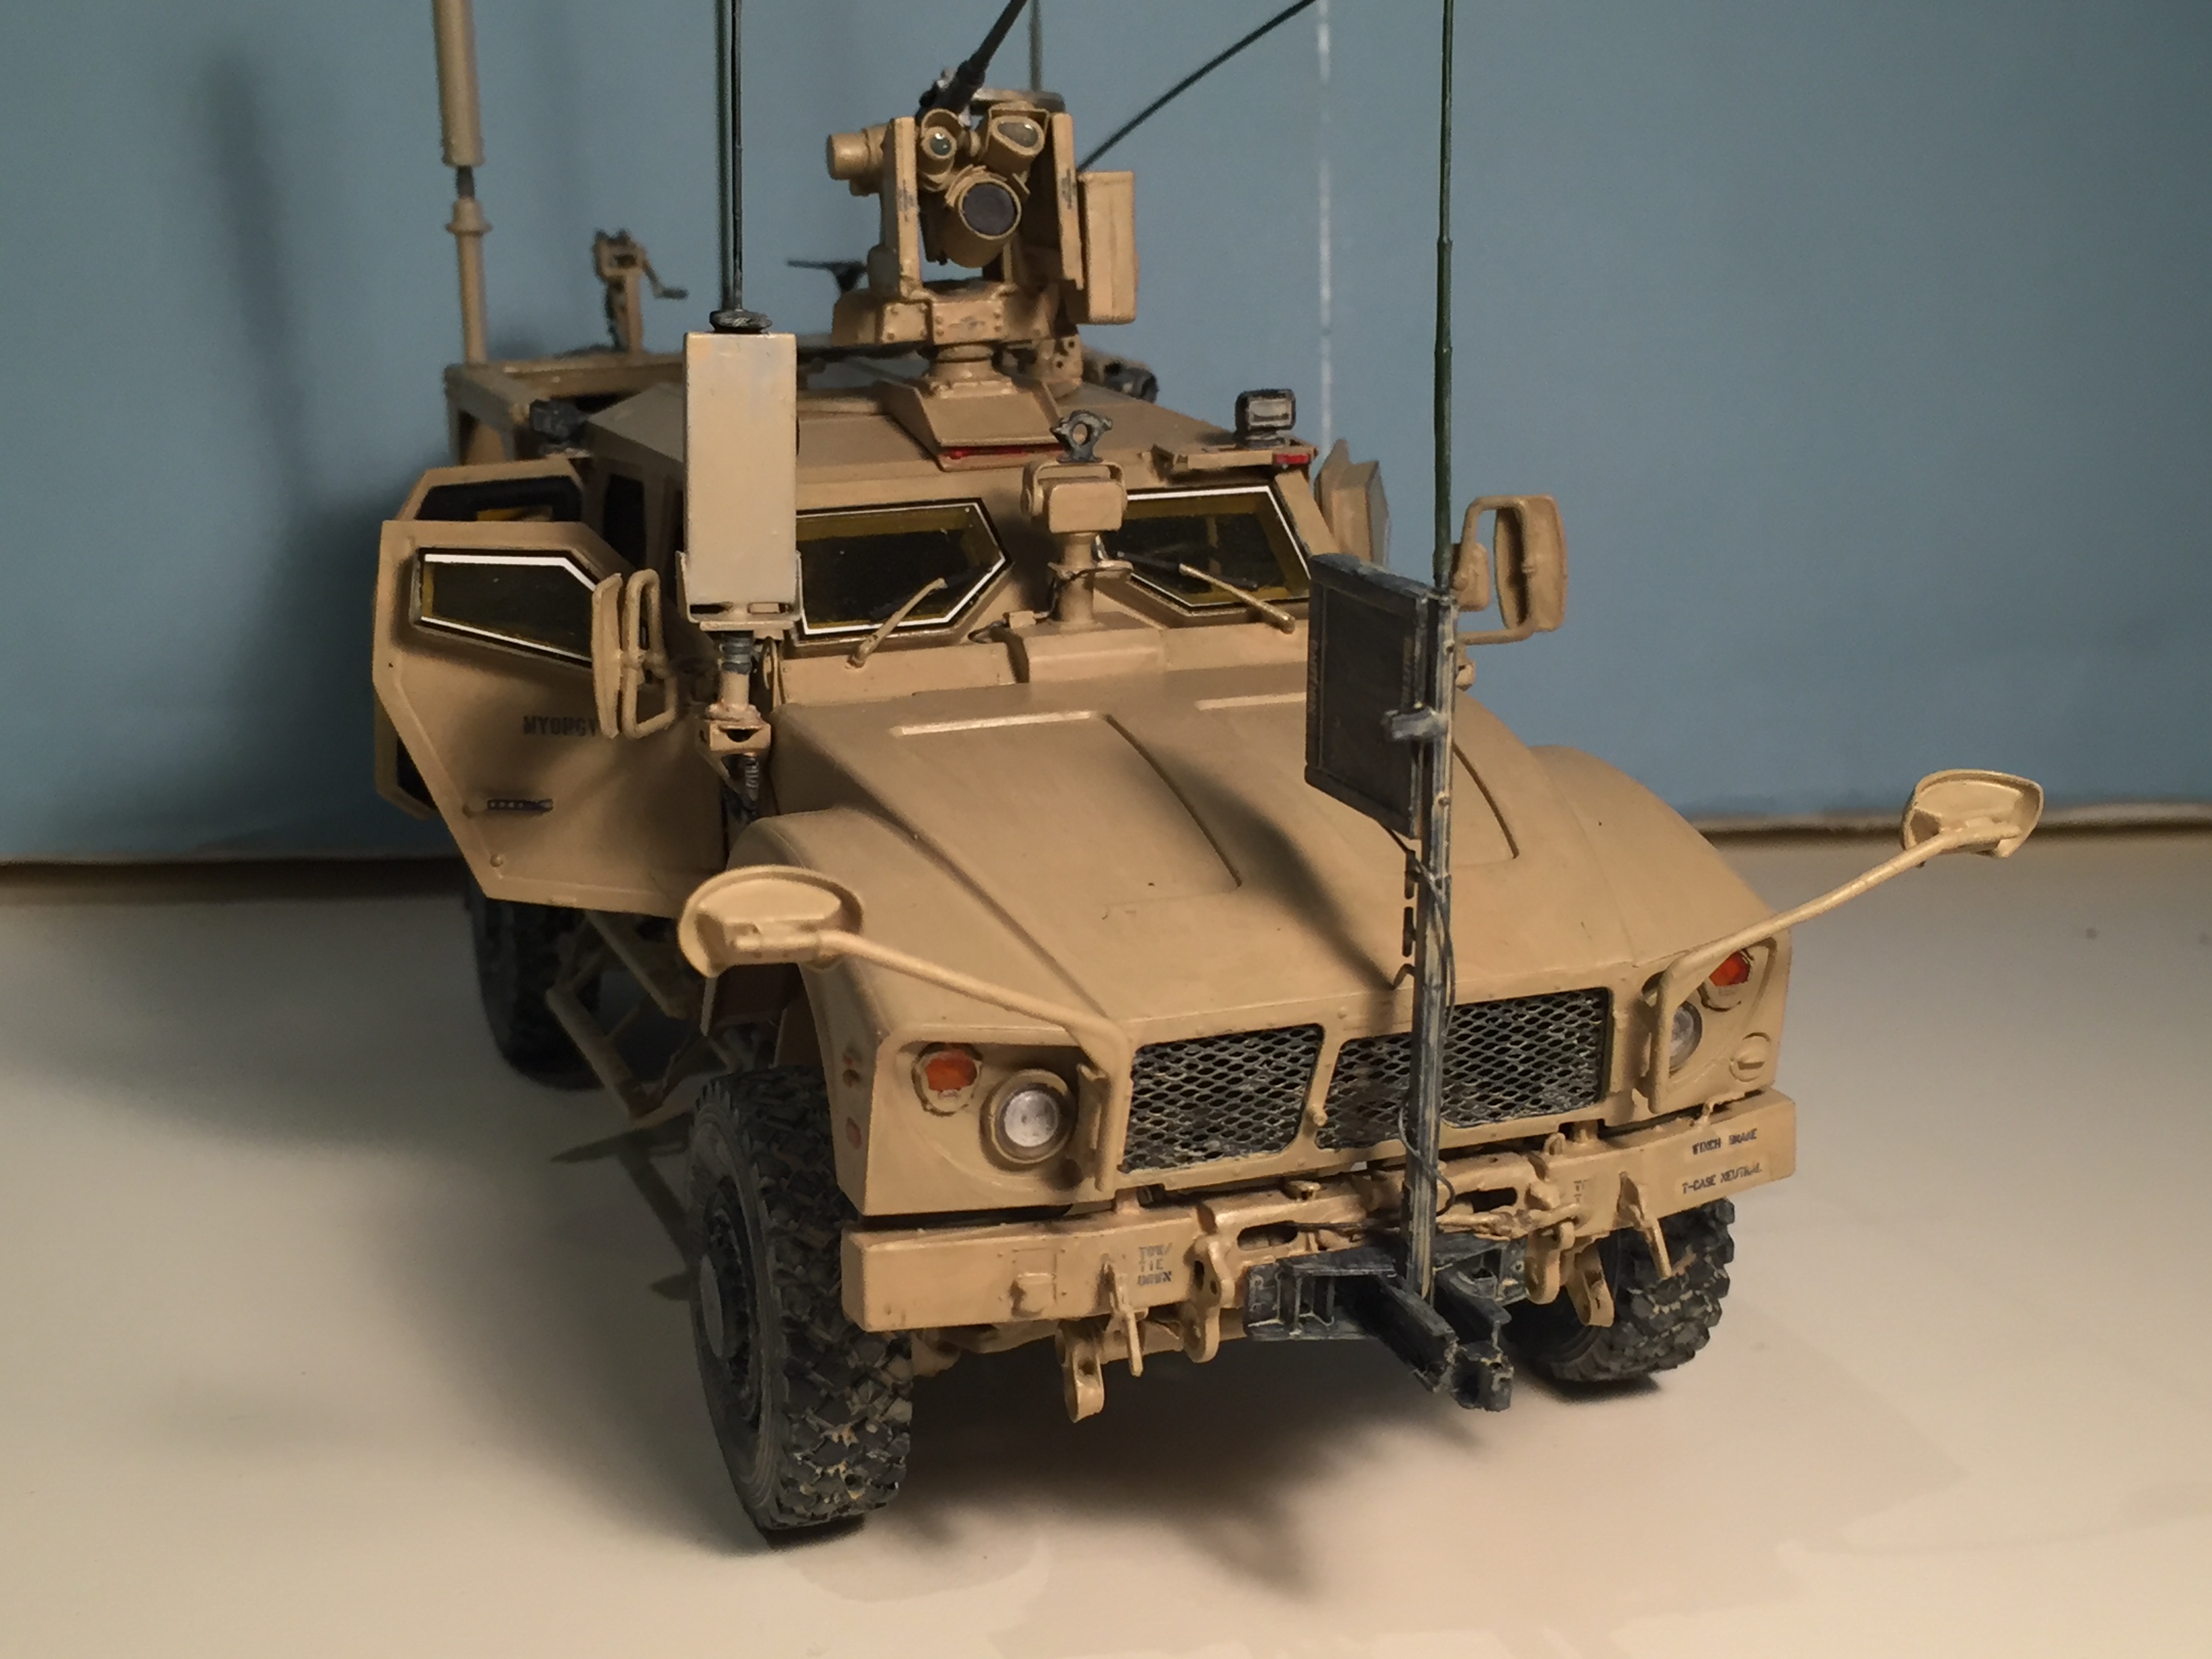 Armorama :: Pro Art Models 1:35 US SF Vehicle Comm Set Review